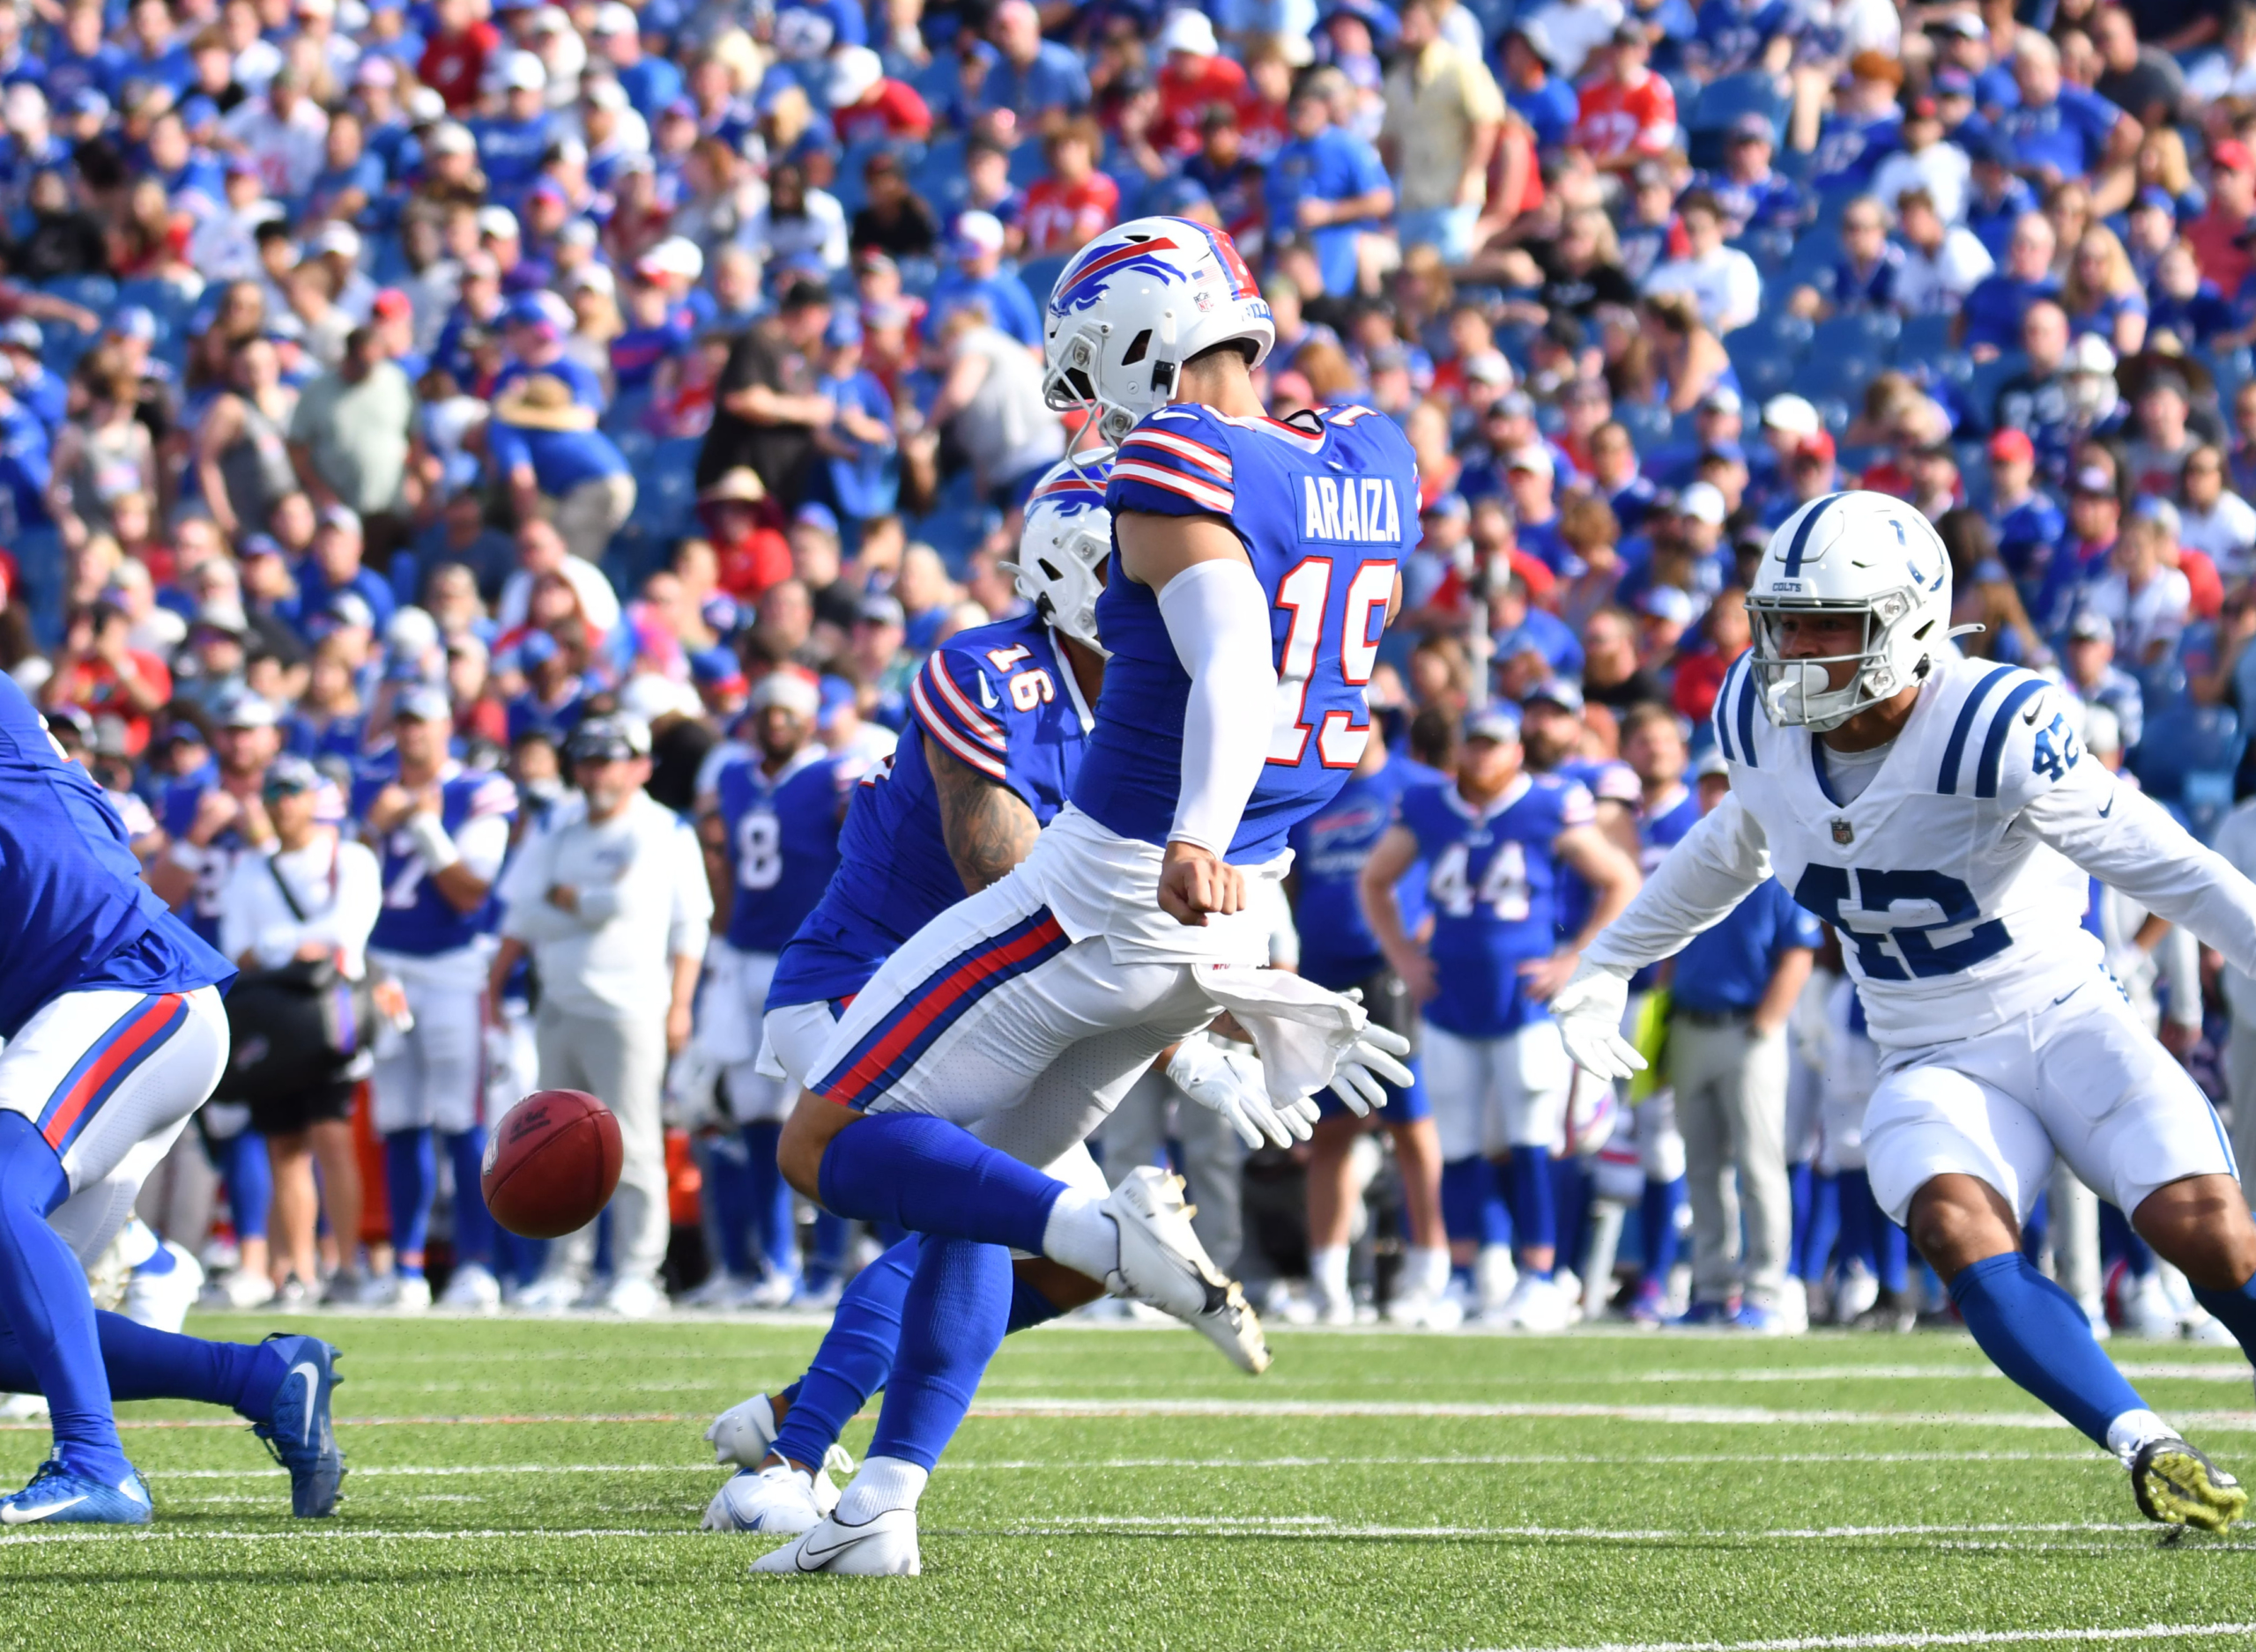 Punt God: Buffalo Bills rookie punter Matt Araiza drills 82-yard punt in NFL preseason debut